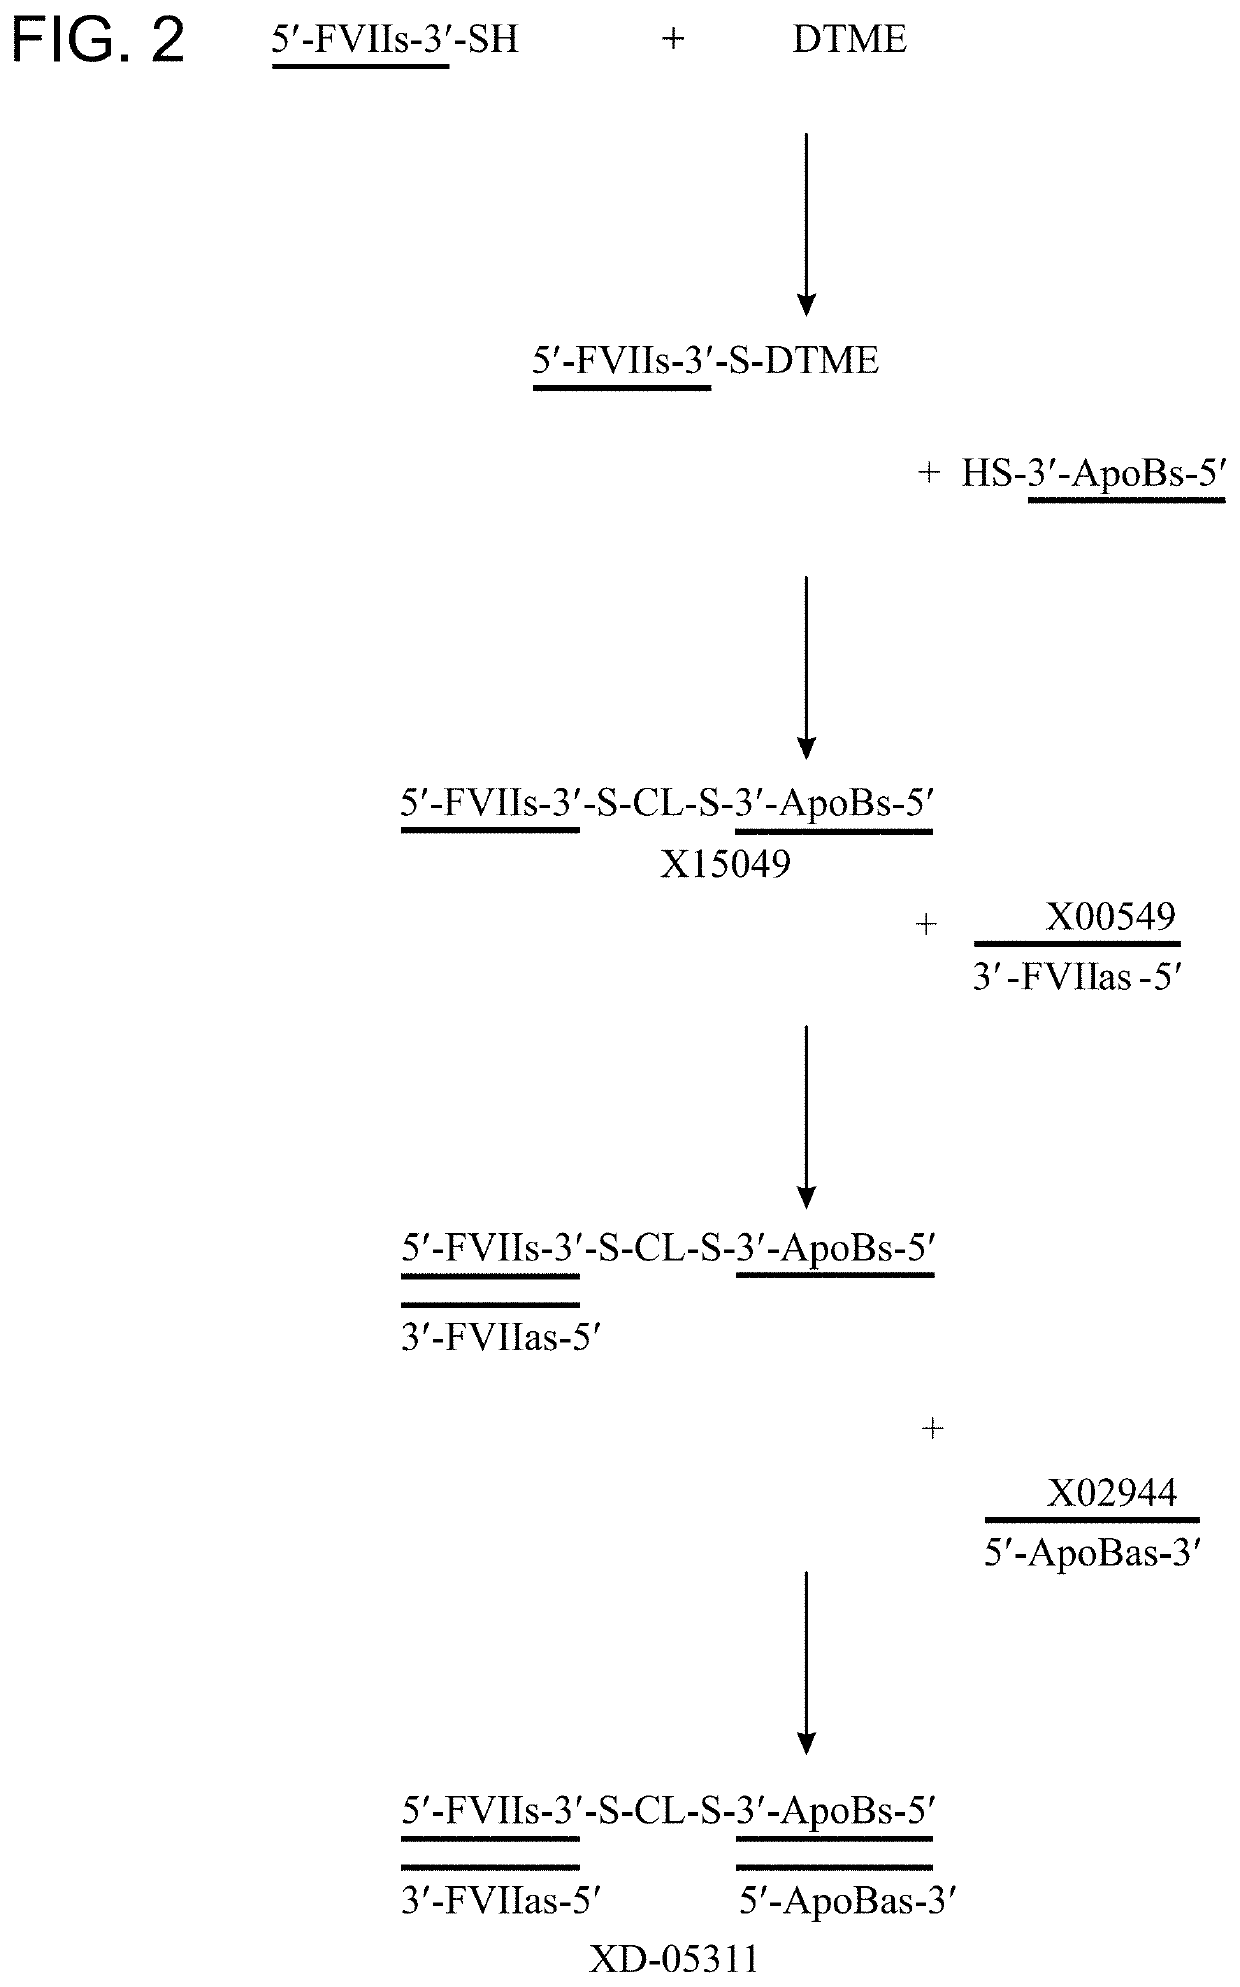 Defined multi-conjugate oligonucleotides